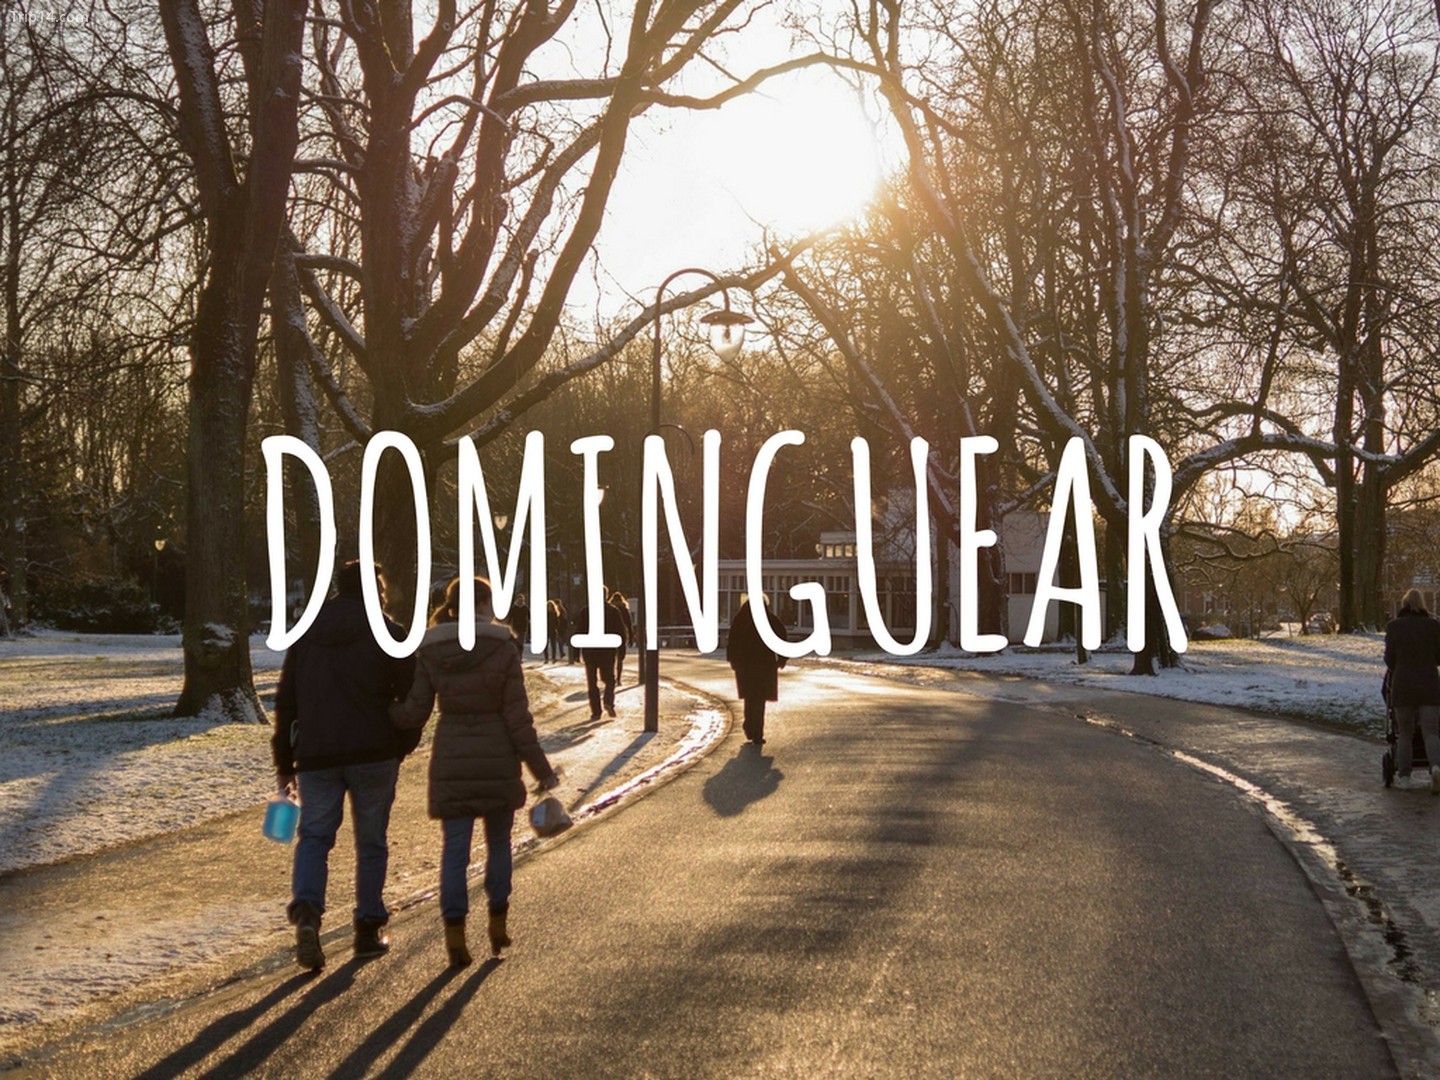 Dominguear